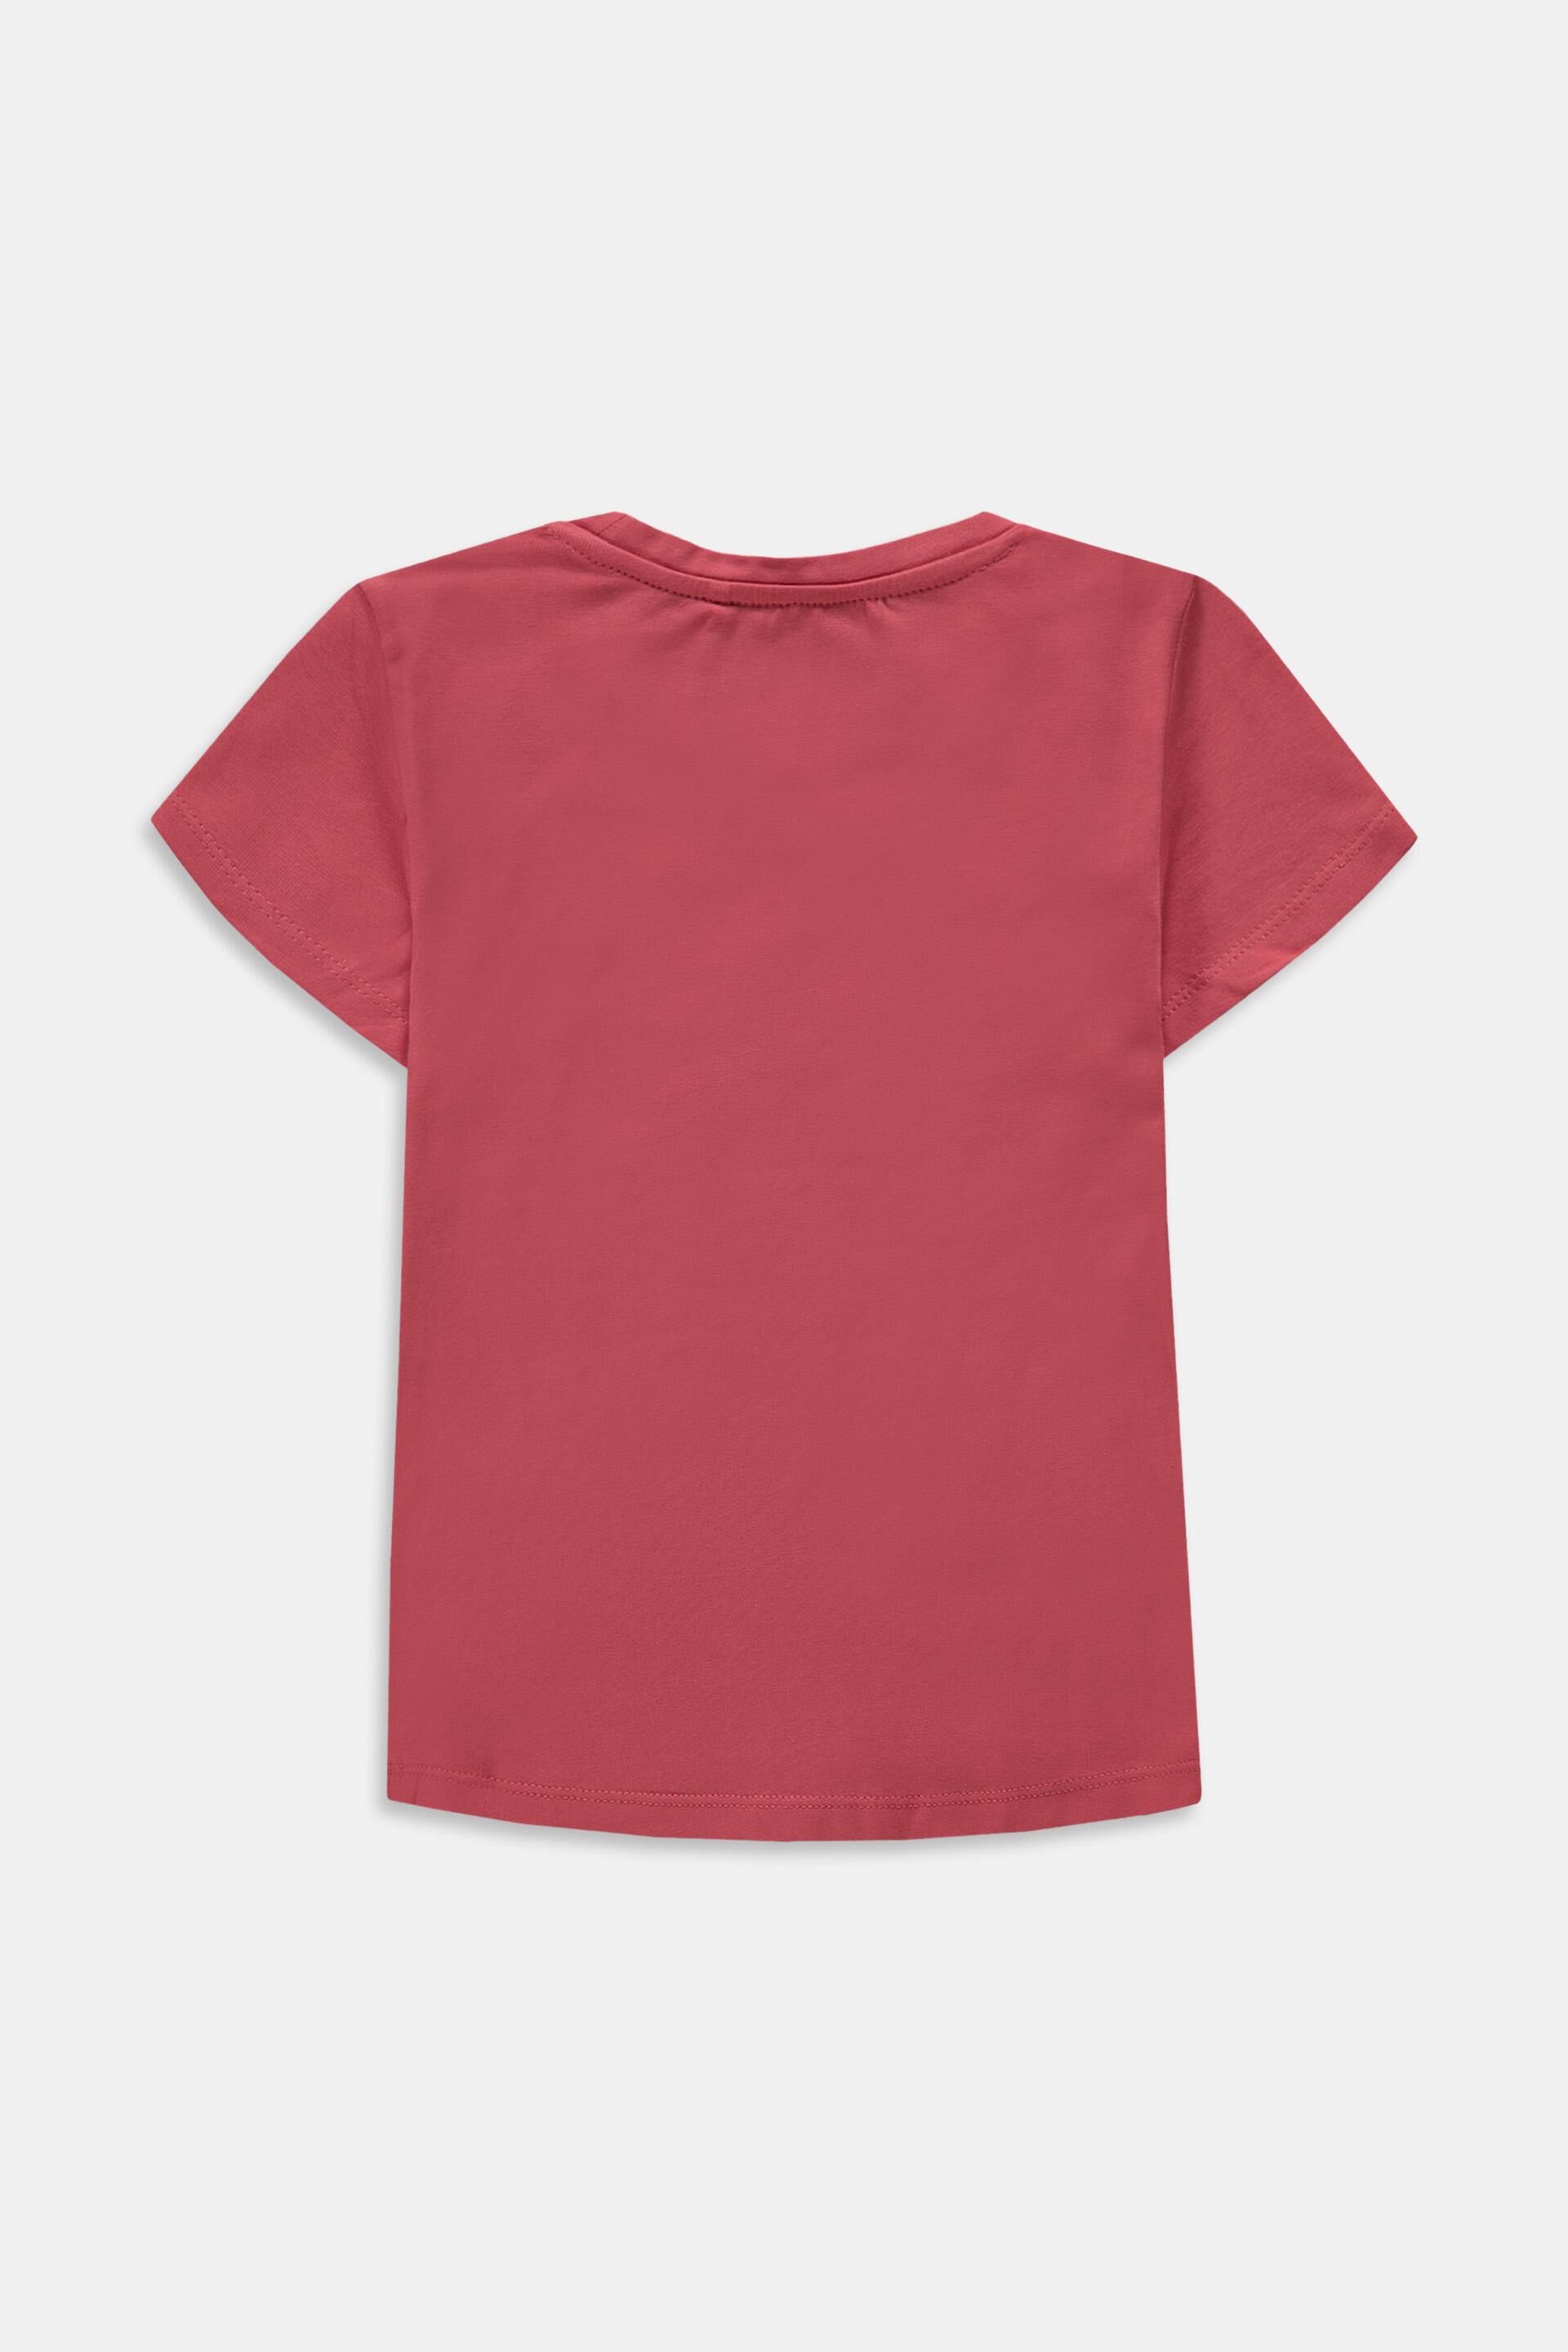 MODA BAMBINI Camicie & T-shirt Glitter Knit T-shirt sconto 86% Rosso 3A 